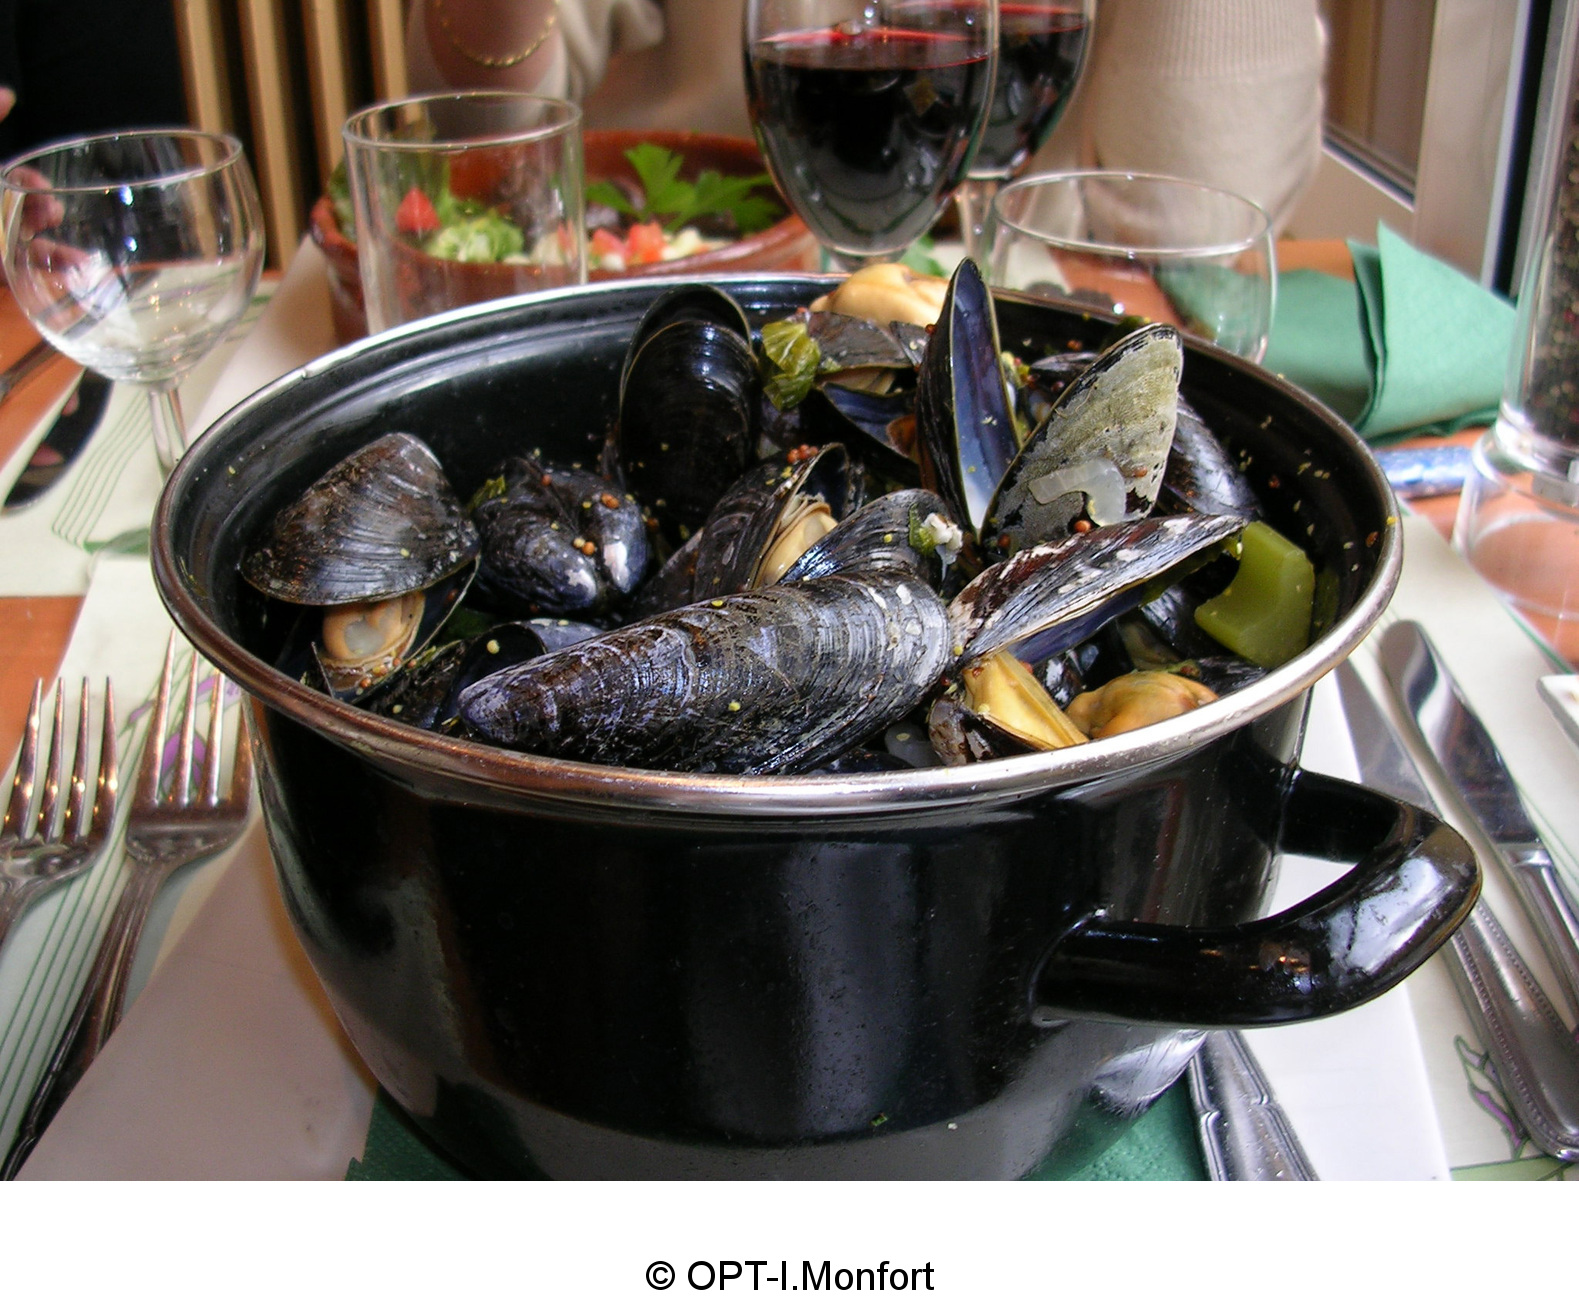 A fresh pot of Belgian mussels. Credit: OPT-I.Monfort